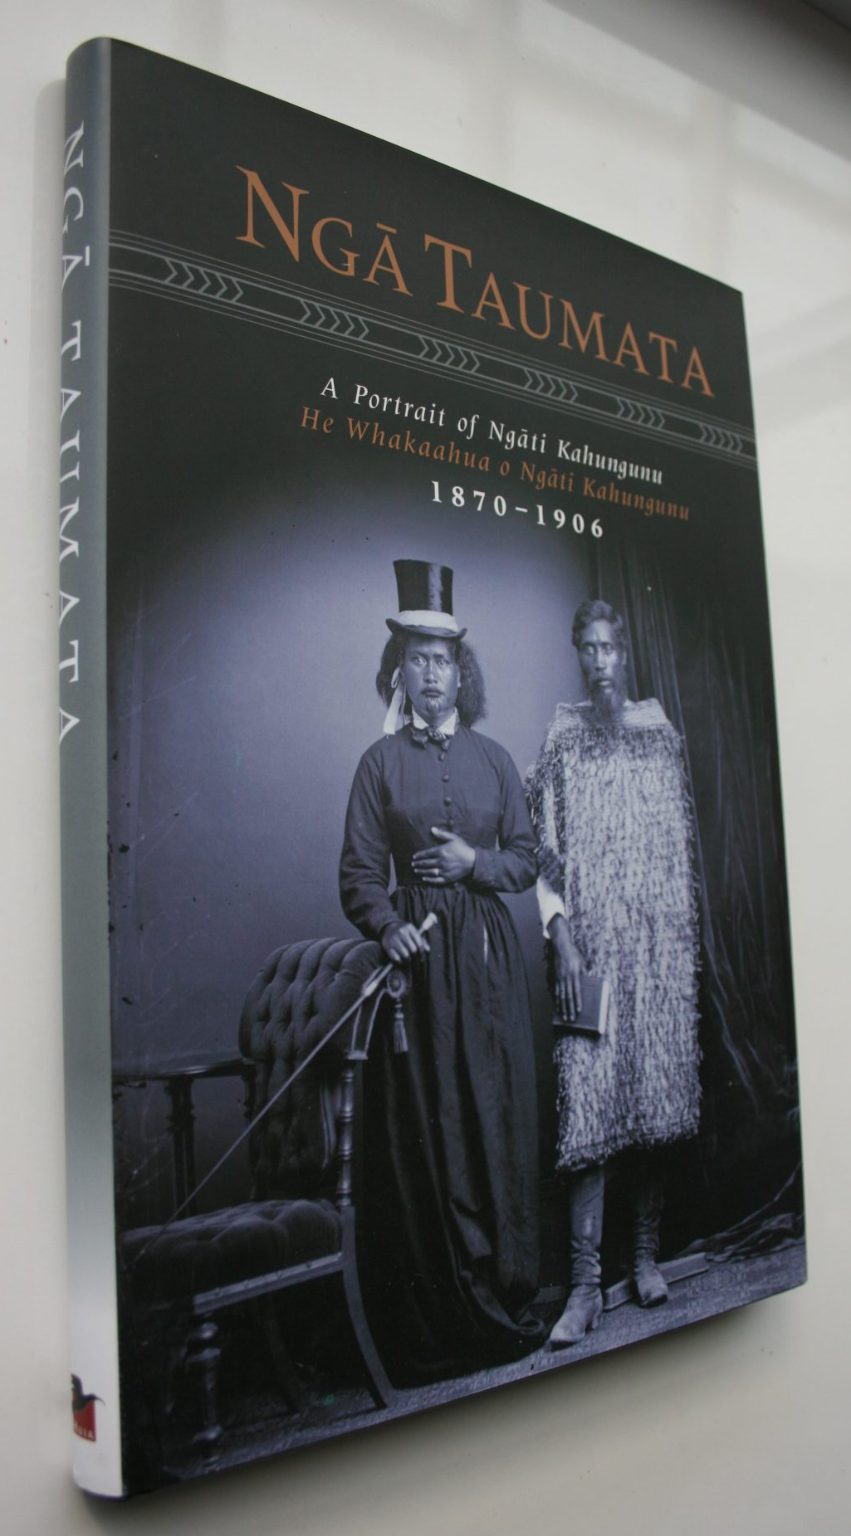 Nga Taumata: A Portrait of Ngati Kahungunu, 1870-1906. By Ngati Huata (Edited by).